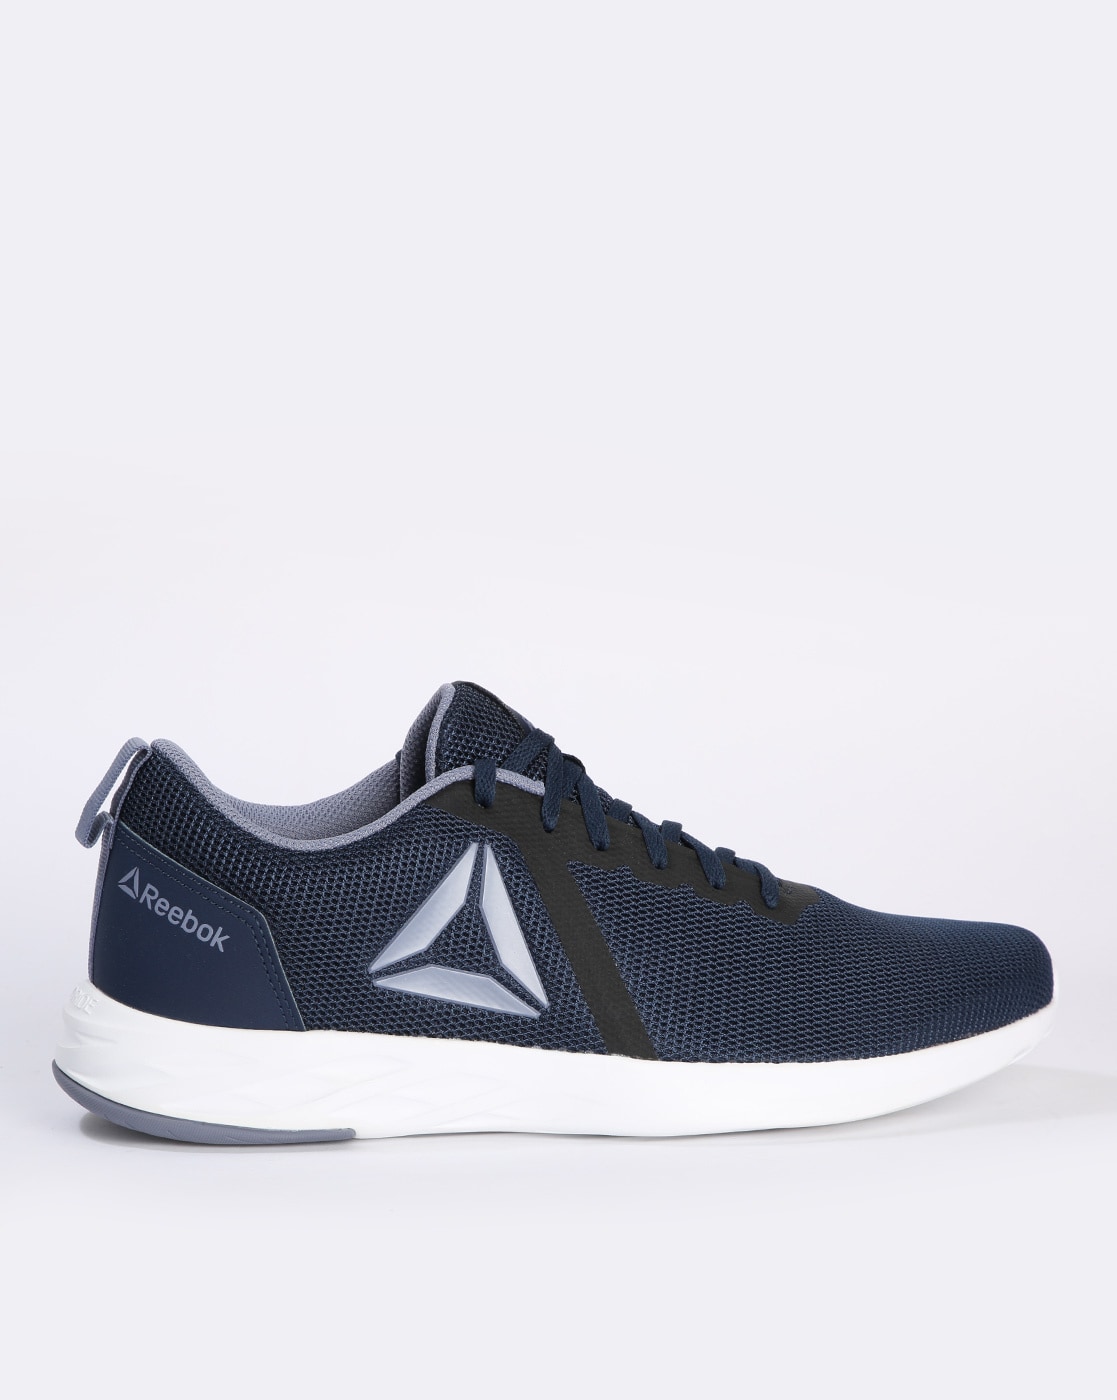 reebok shoes navy blue